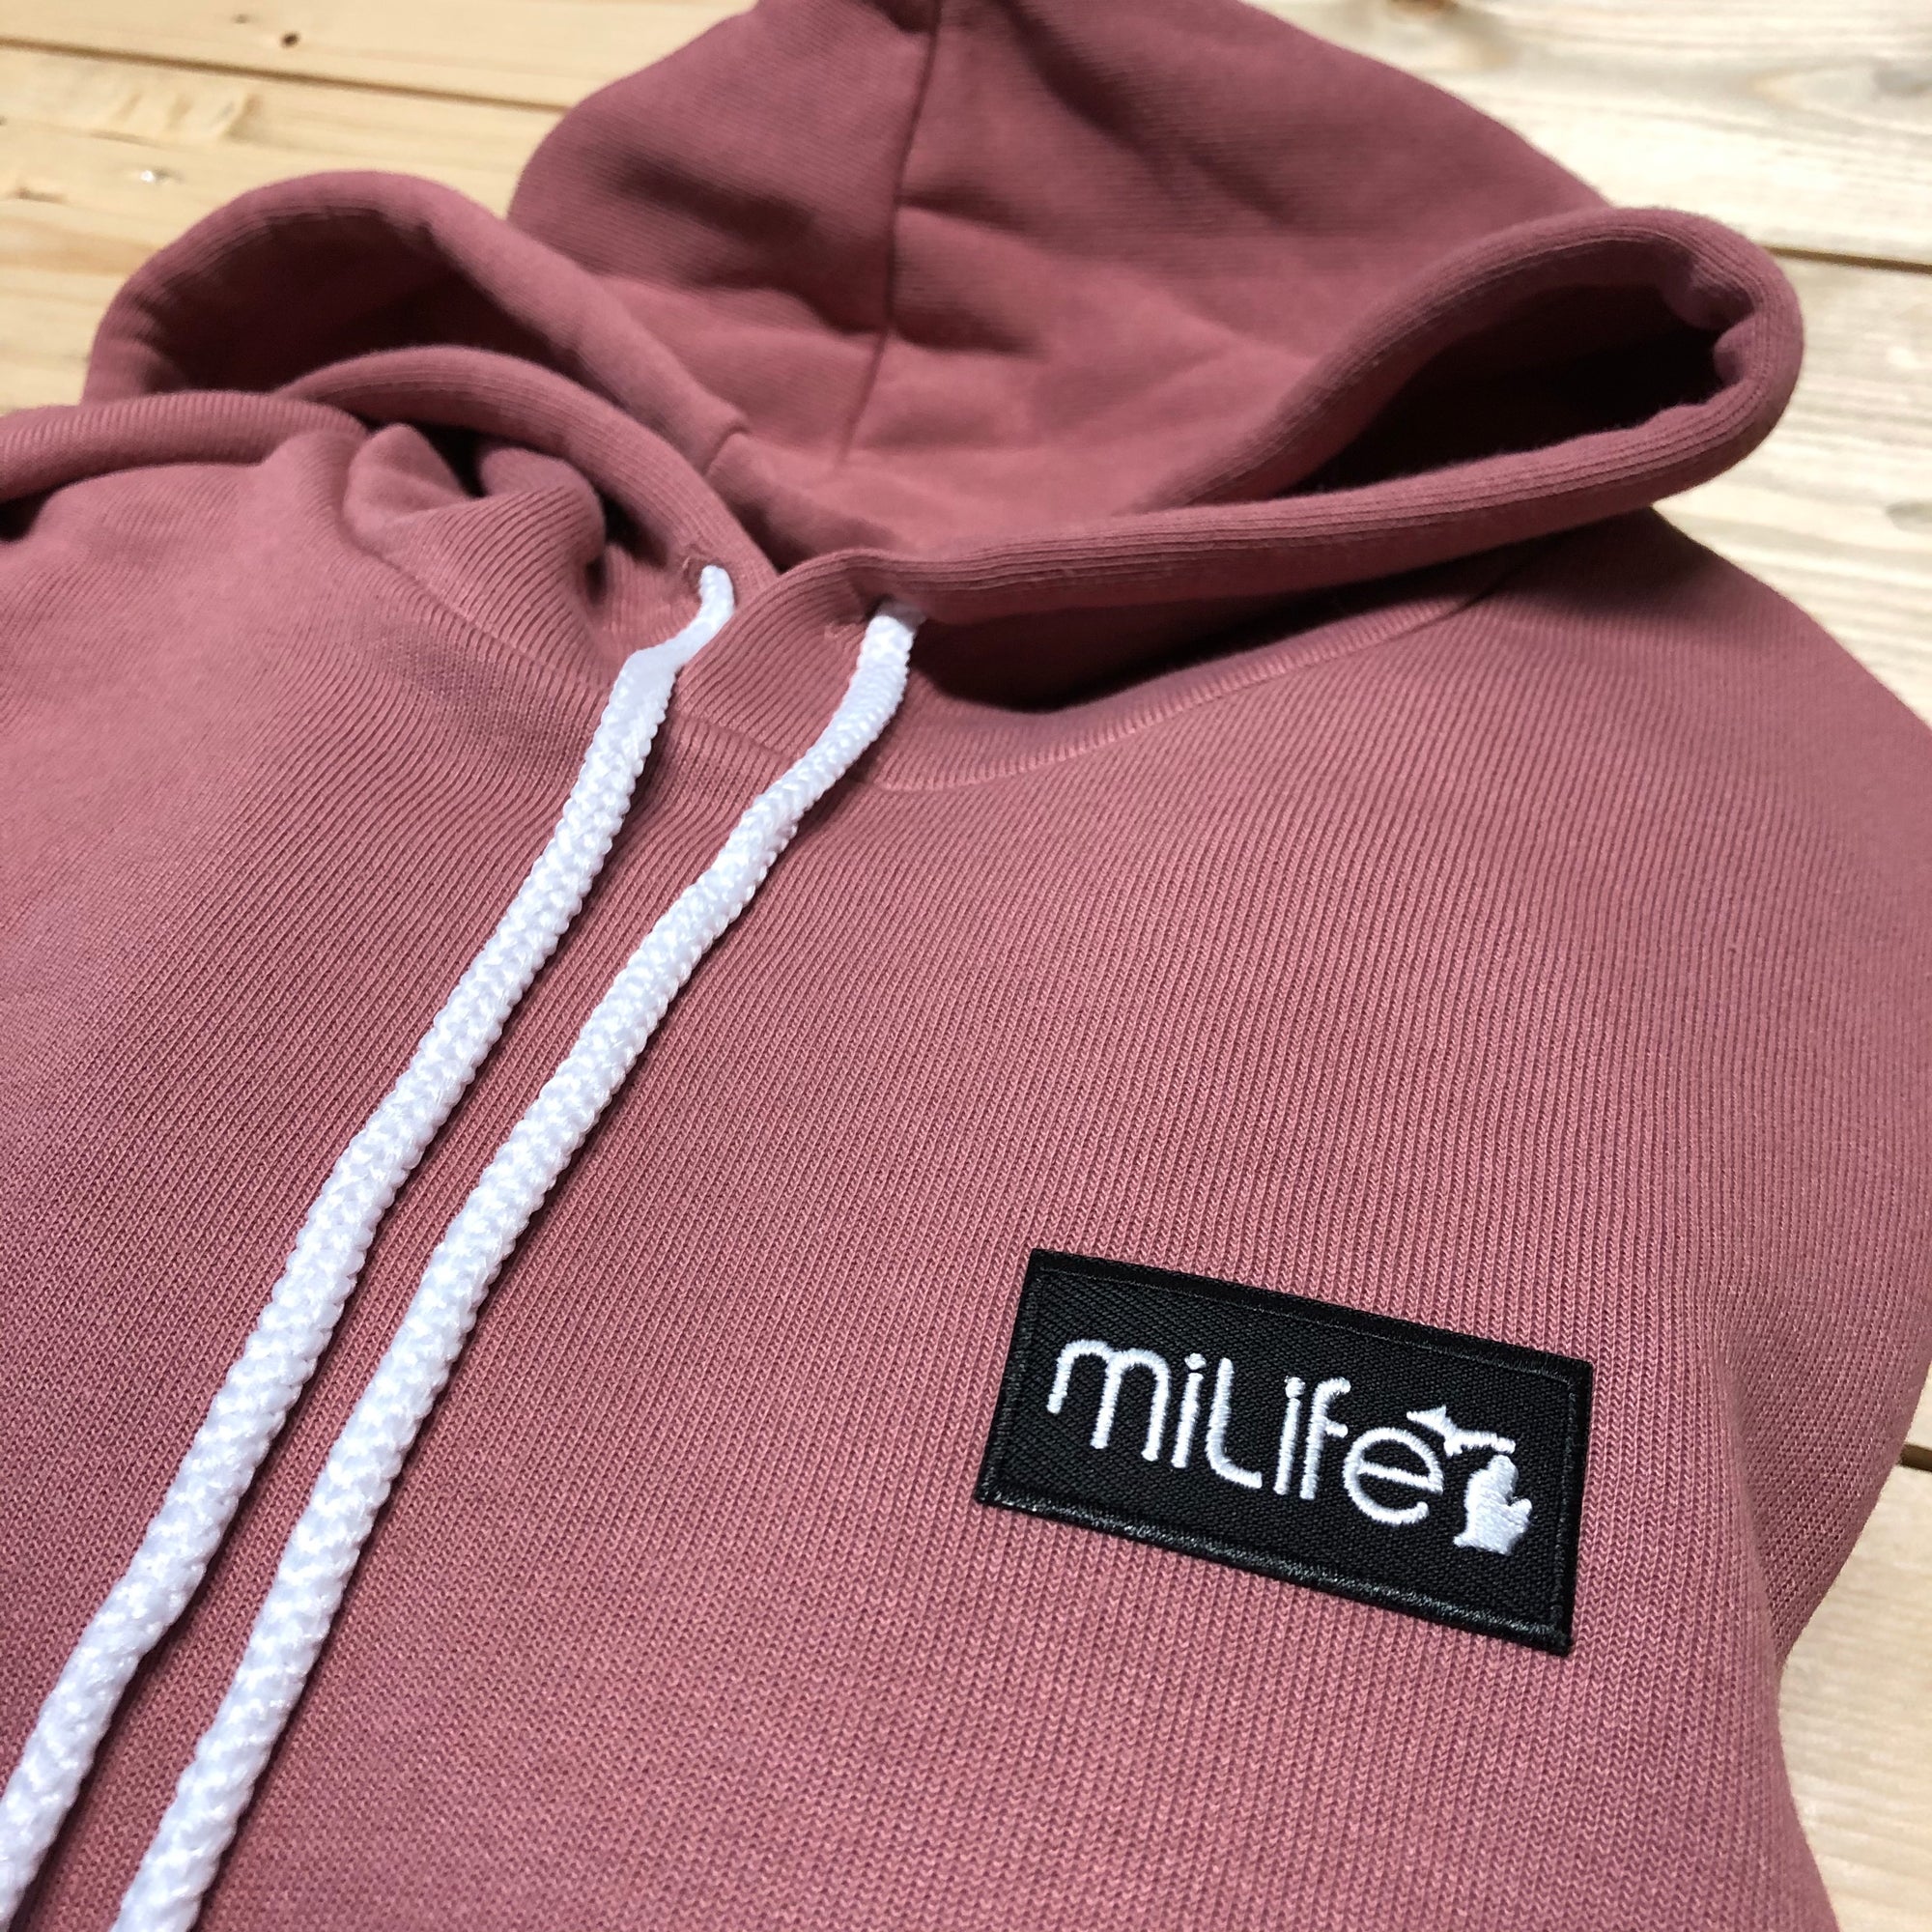 Shop All MiLife Sweatshirts